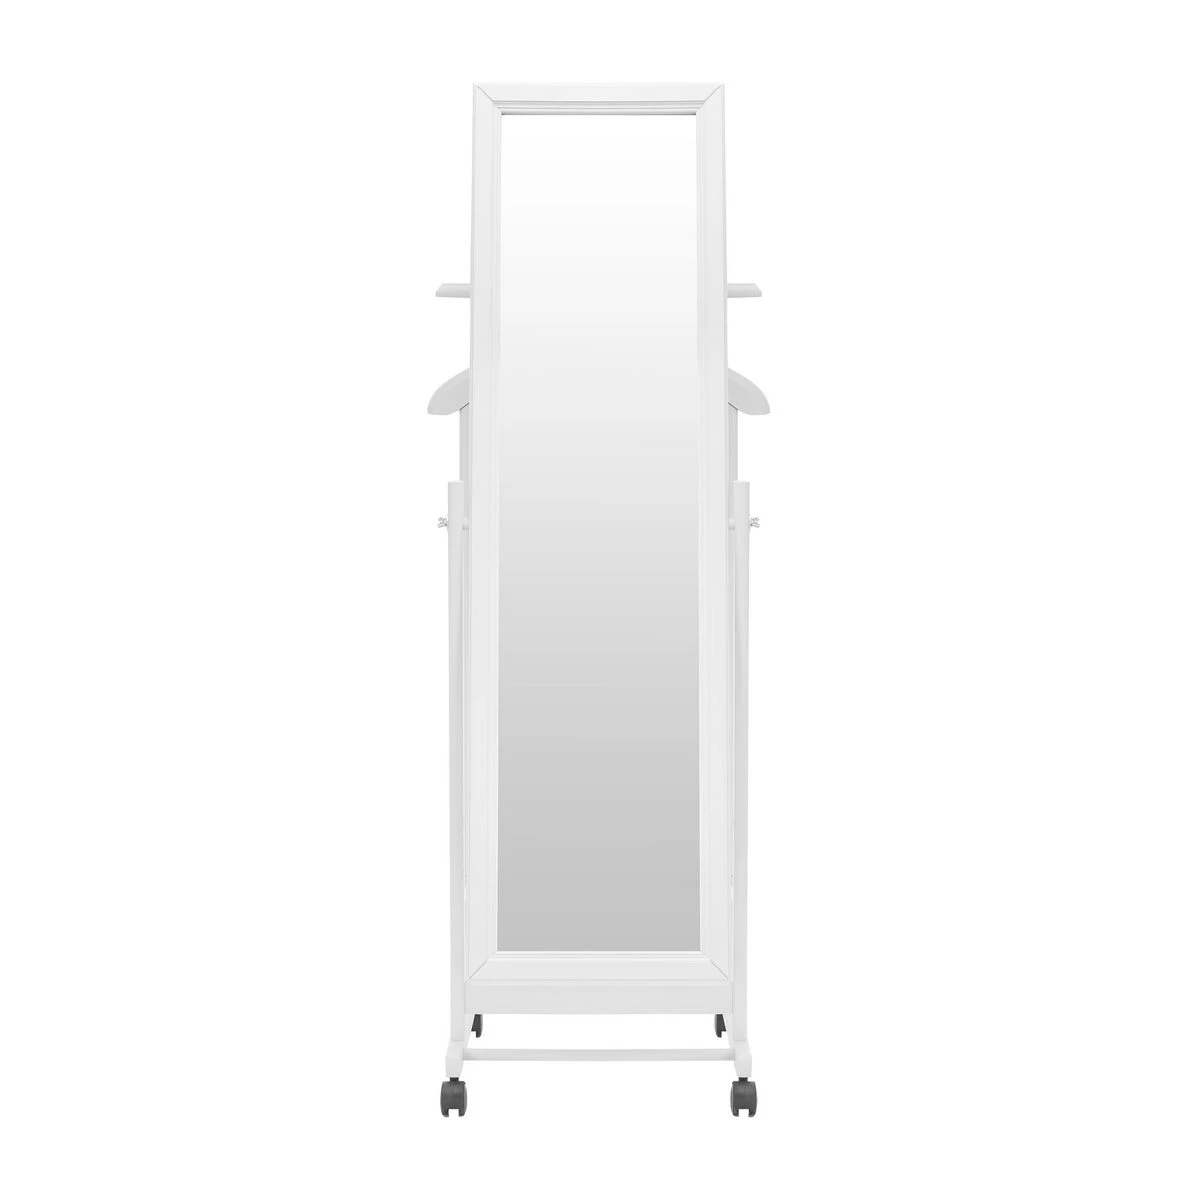 Вешалка с зеркалом Leset Сиэтл (Импэкс). Цвет каркаса: Белый